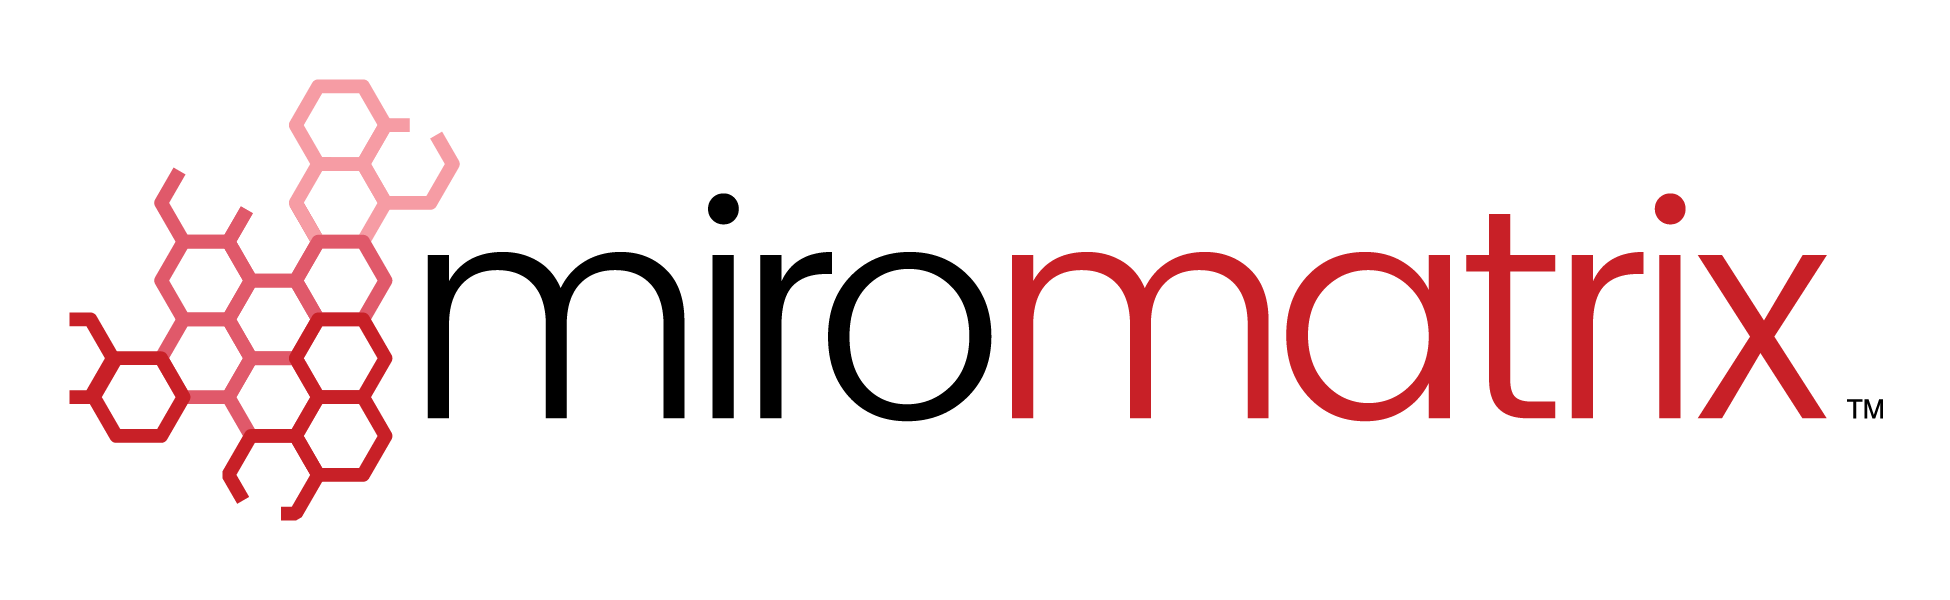 Miromatrix Medical Inc. logo